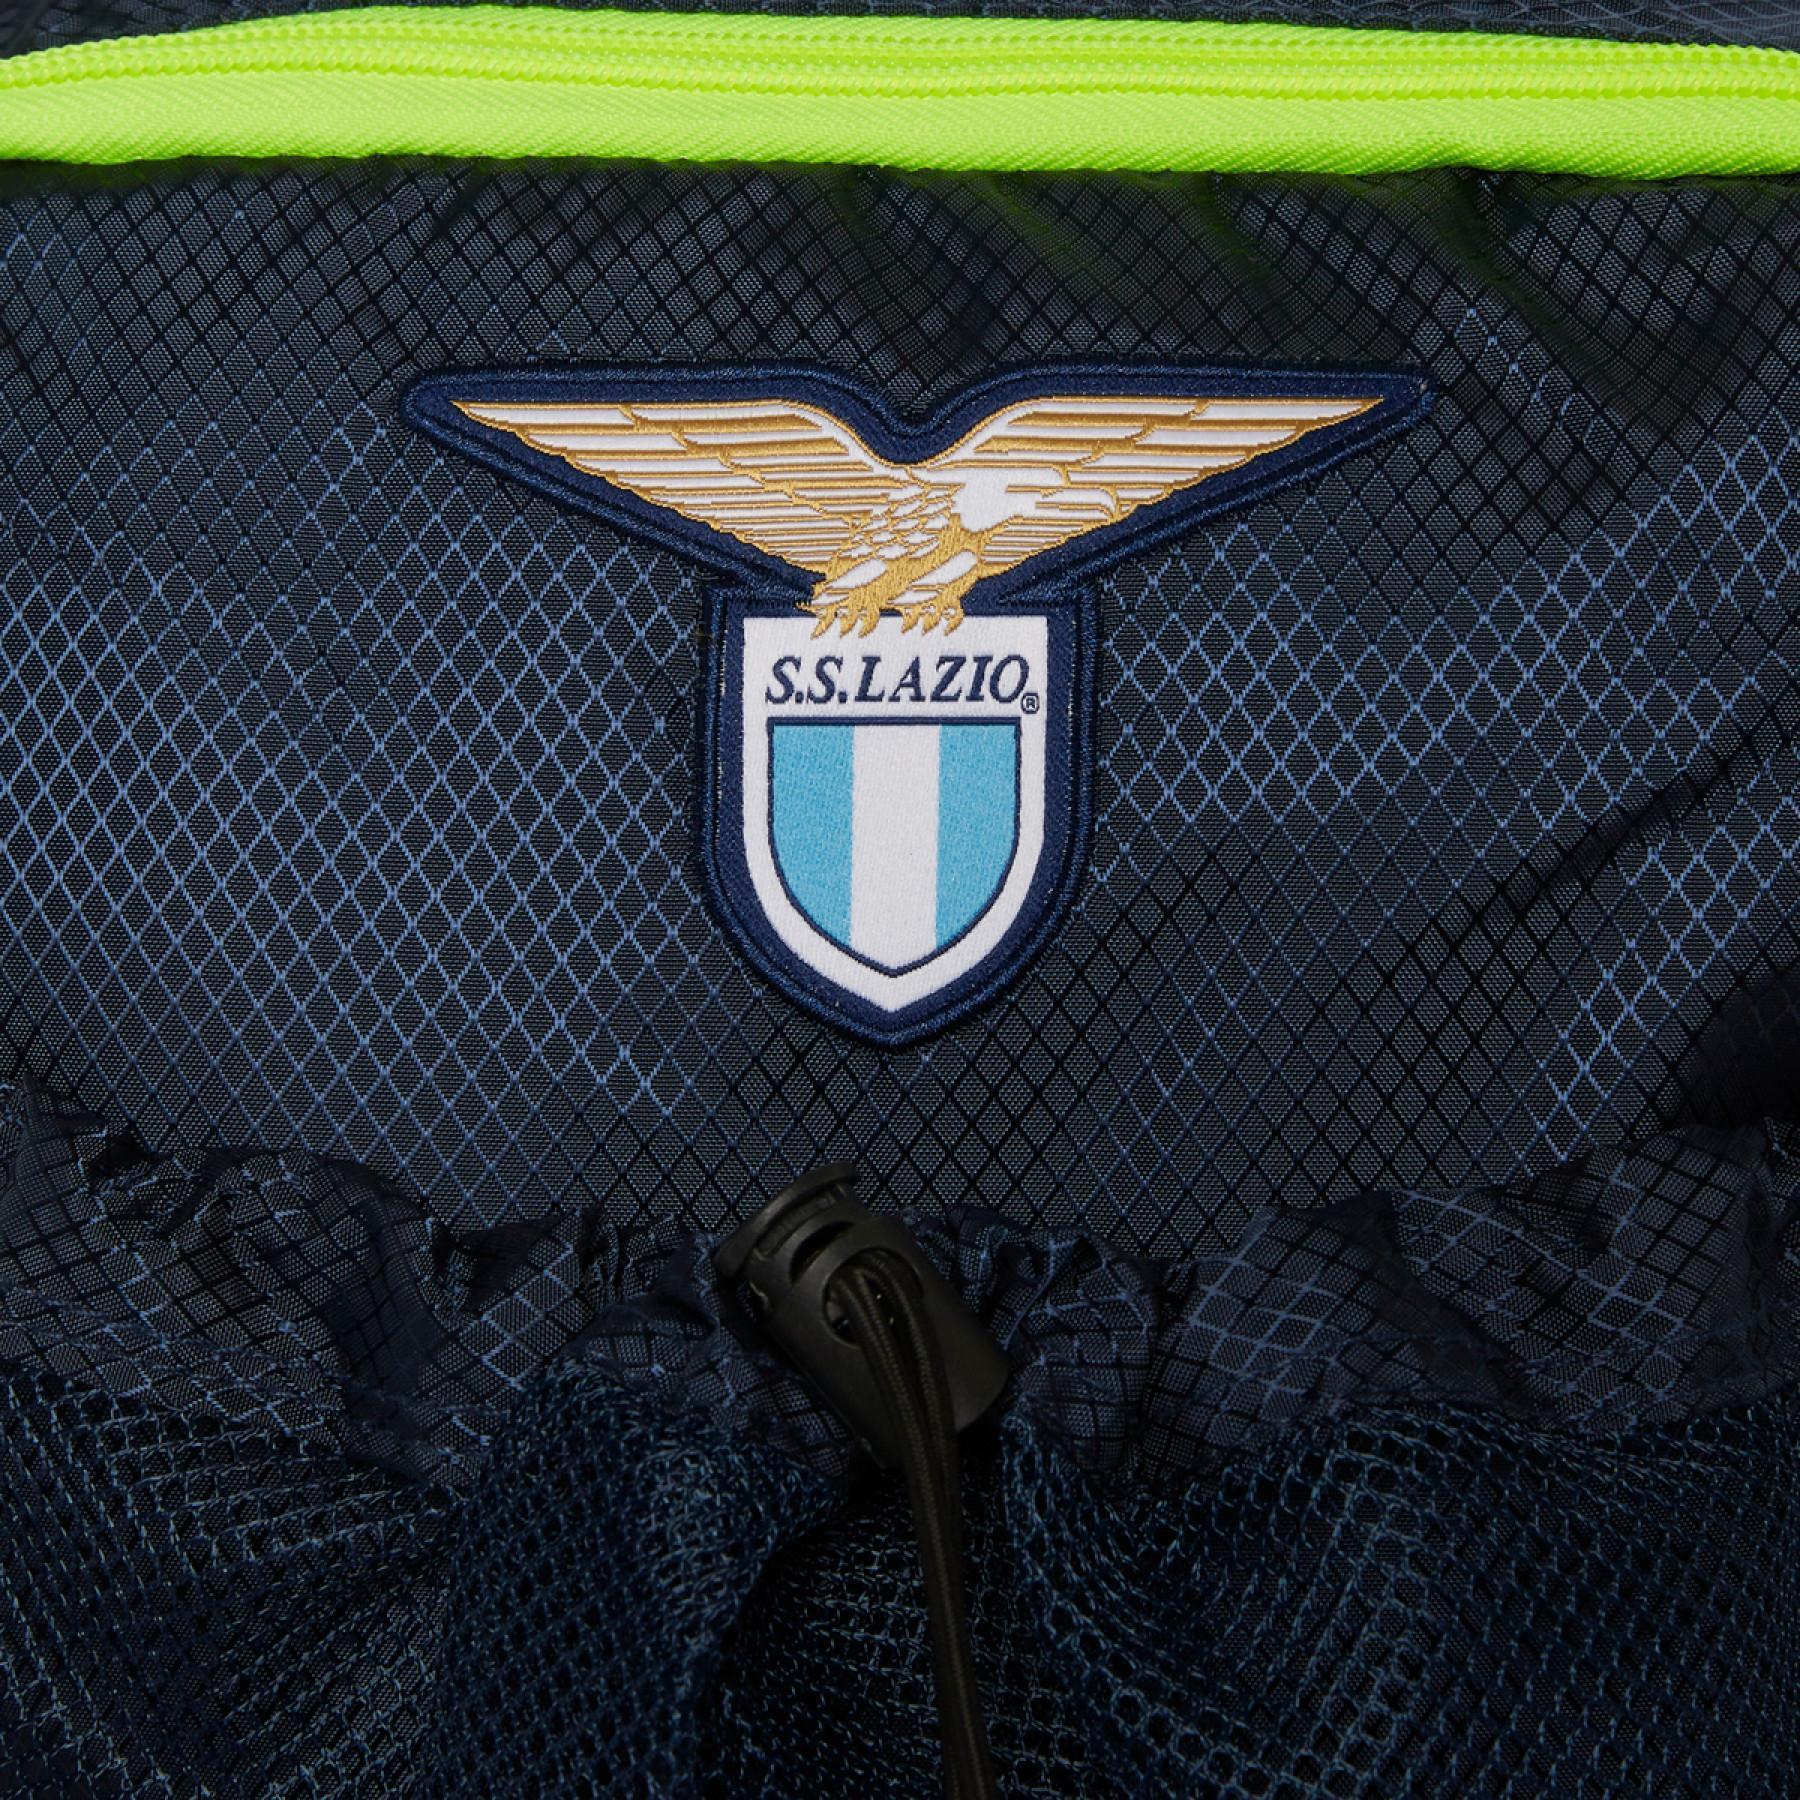 Bag at Lazio Rome dos 2020/21